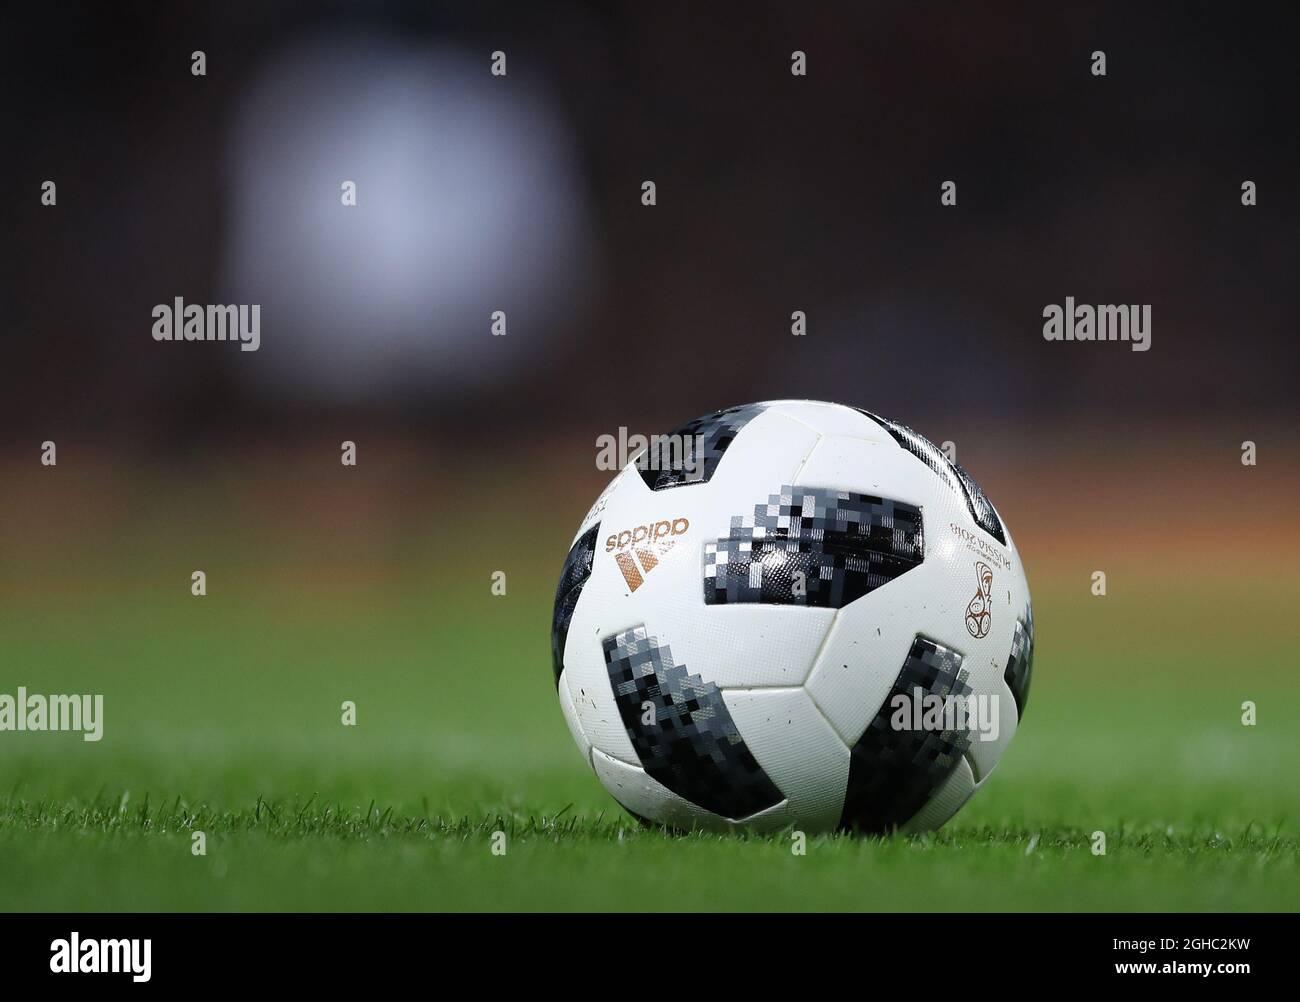 copa-do-mundo-2018-bola-telstar-texto-imprimir-4.JPG (464×677)